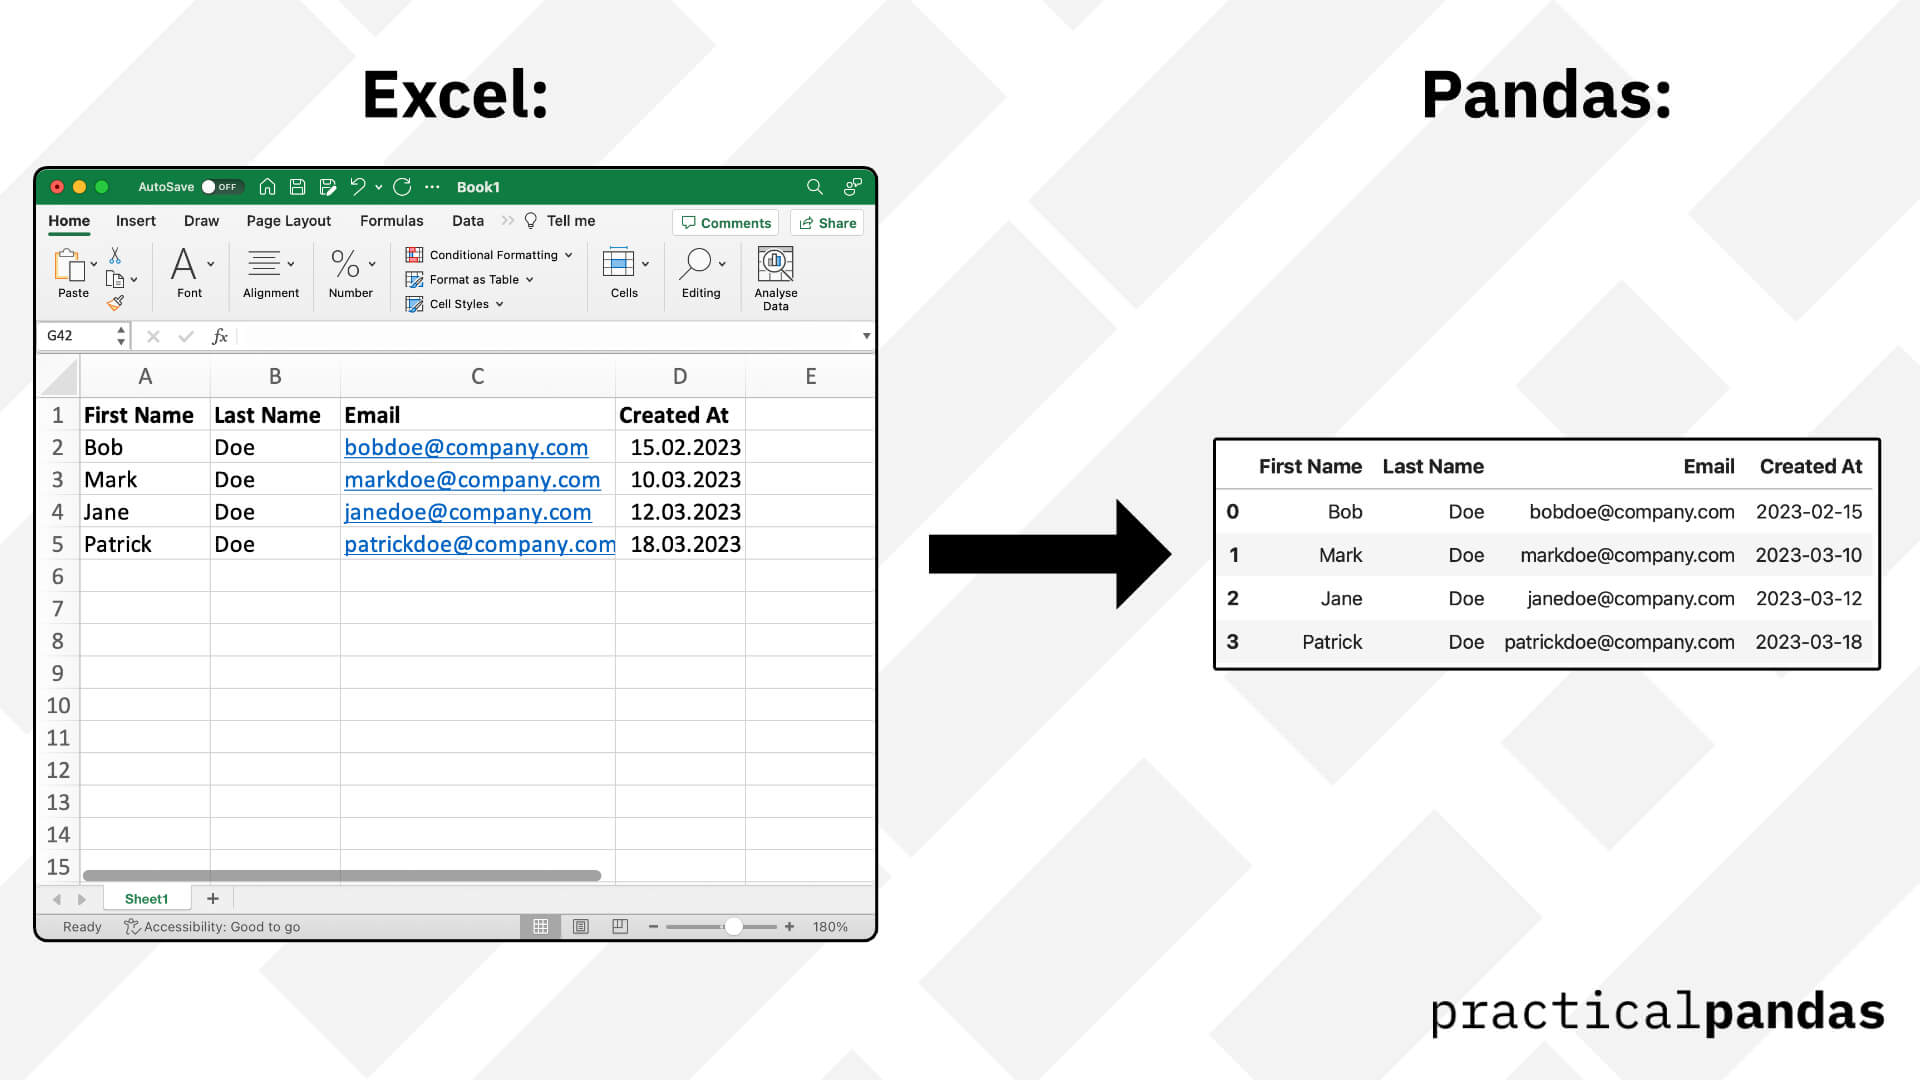 Image 1 - Excel Spreadsheet vs Pandas DataFrame (Image by author)